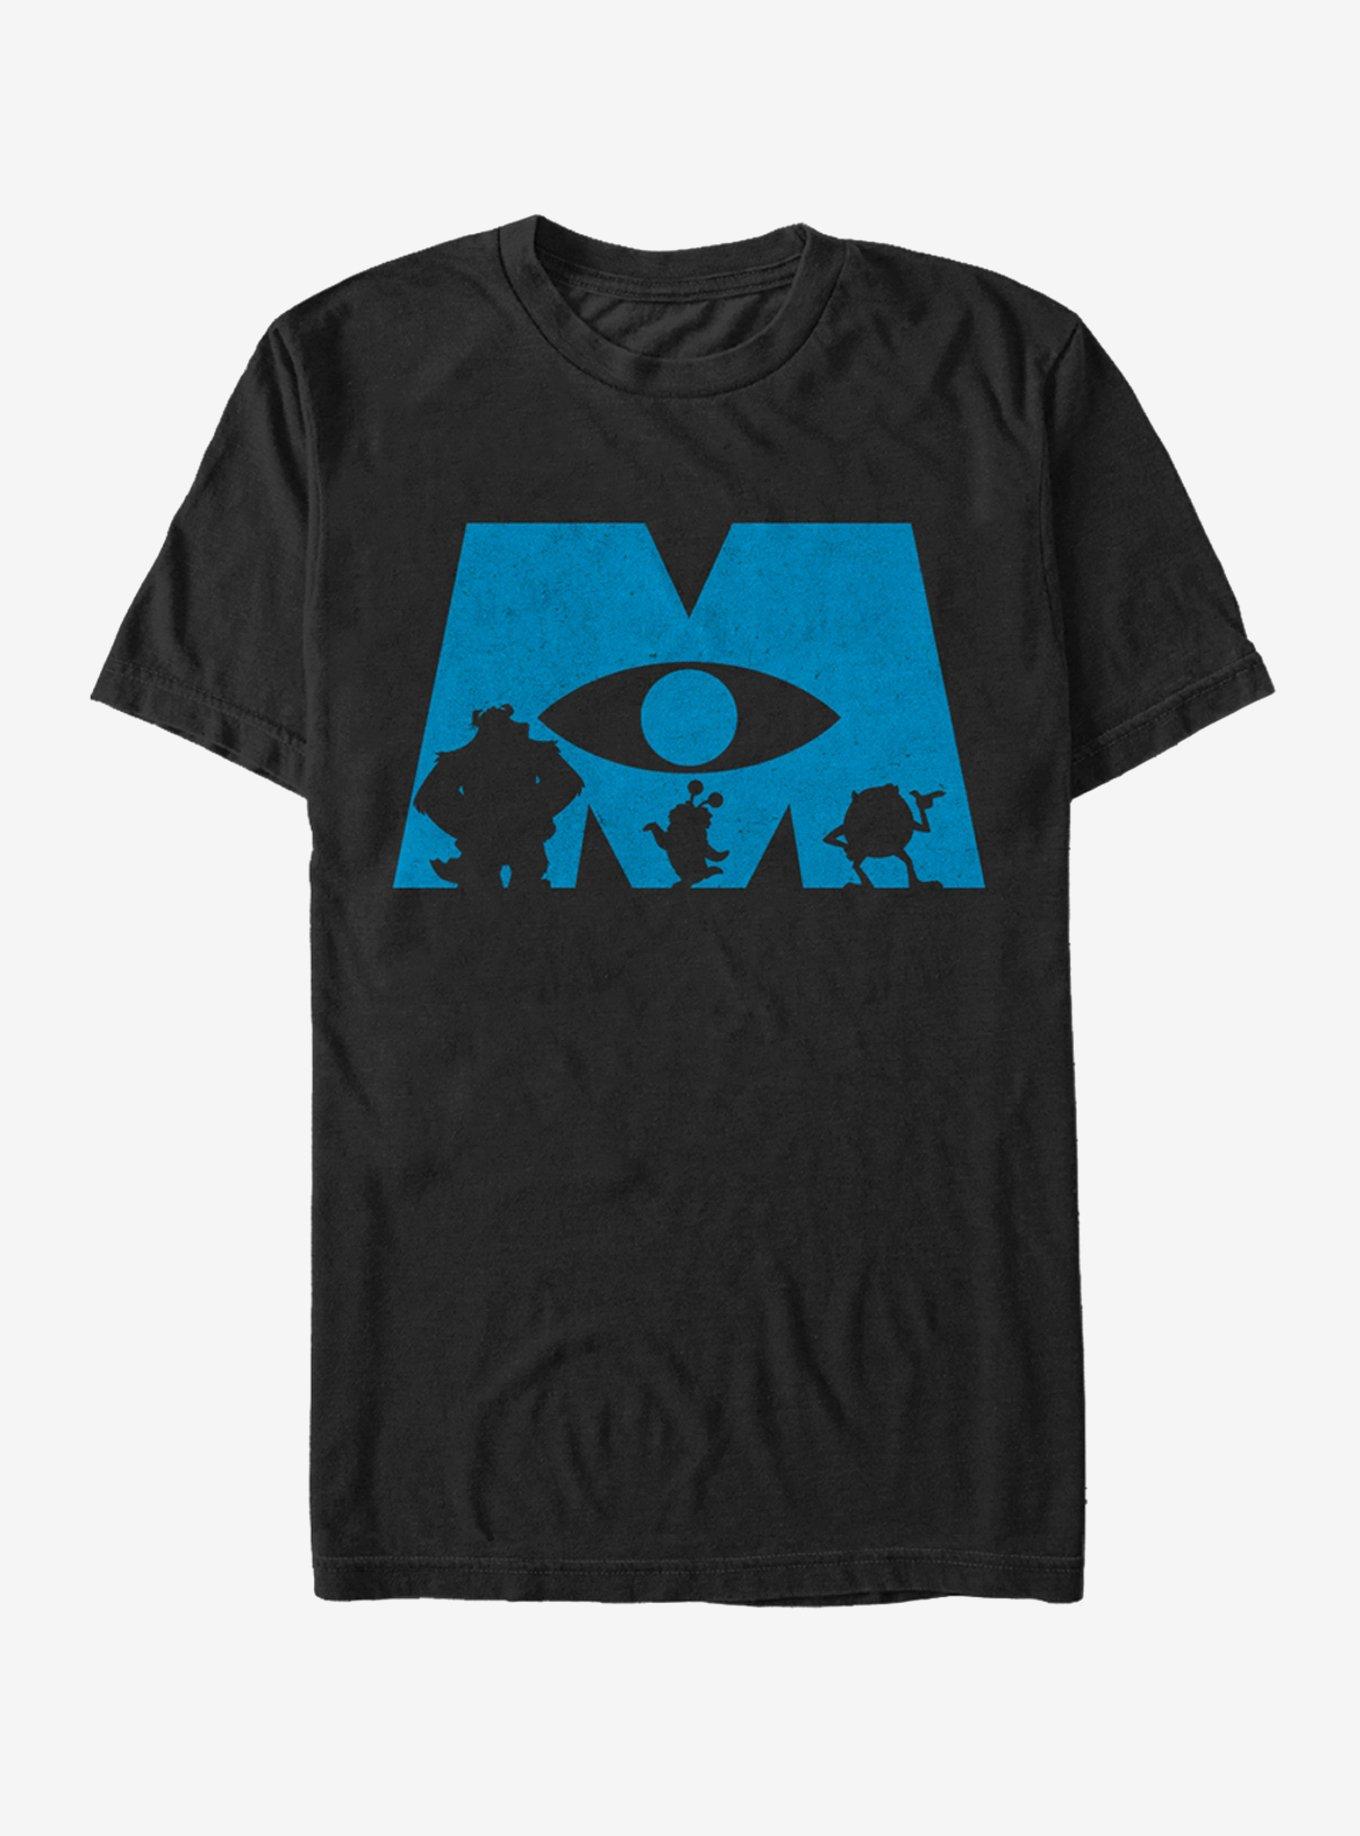 Monsters Inc. Logo Silhouette T-Shirt